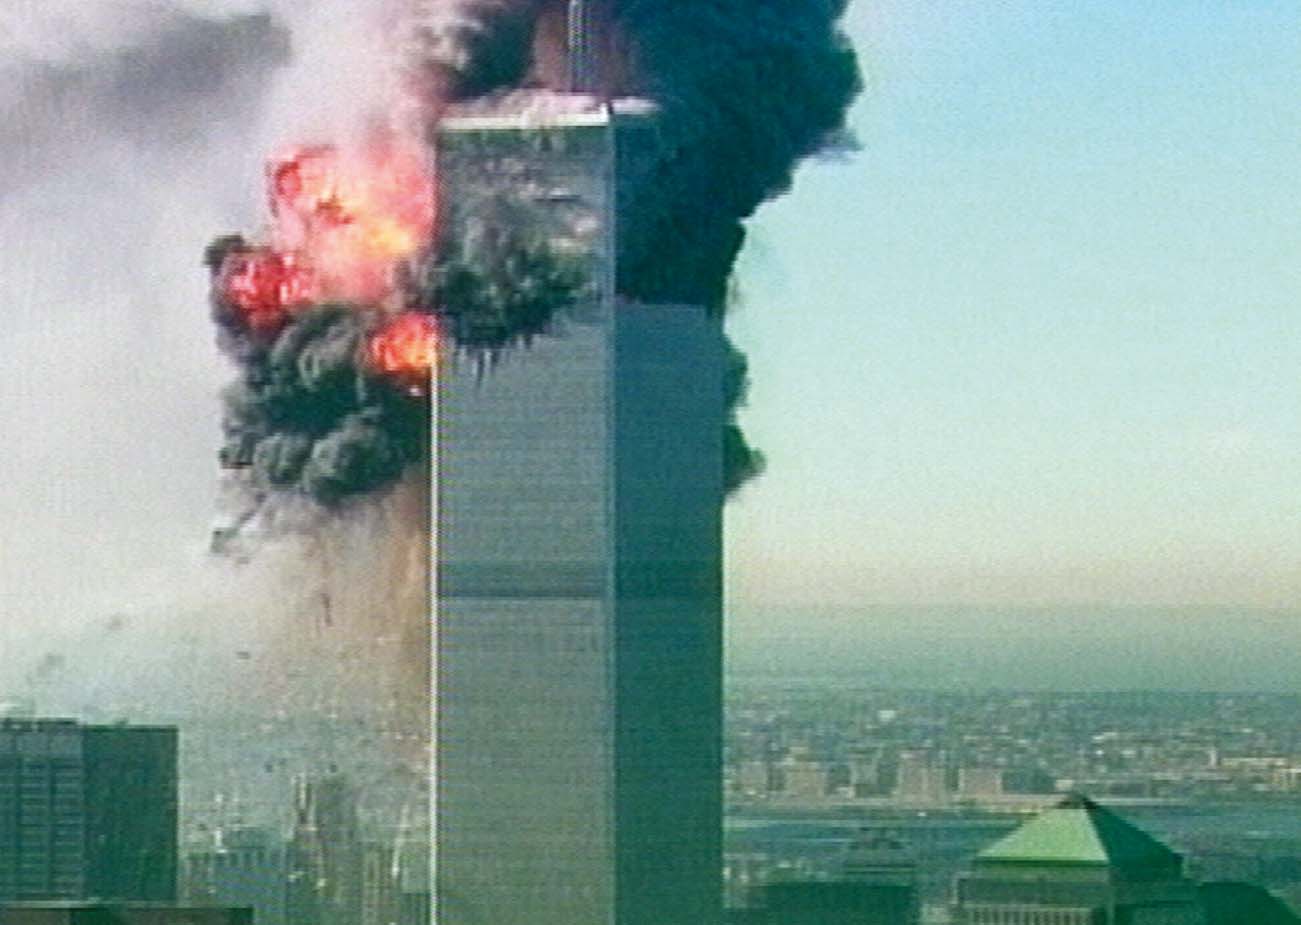 The World Trade Center in New York on Sept. 11, 2001.